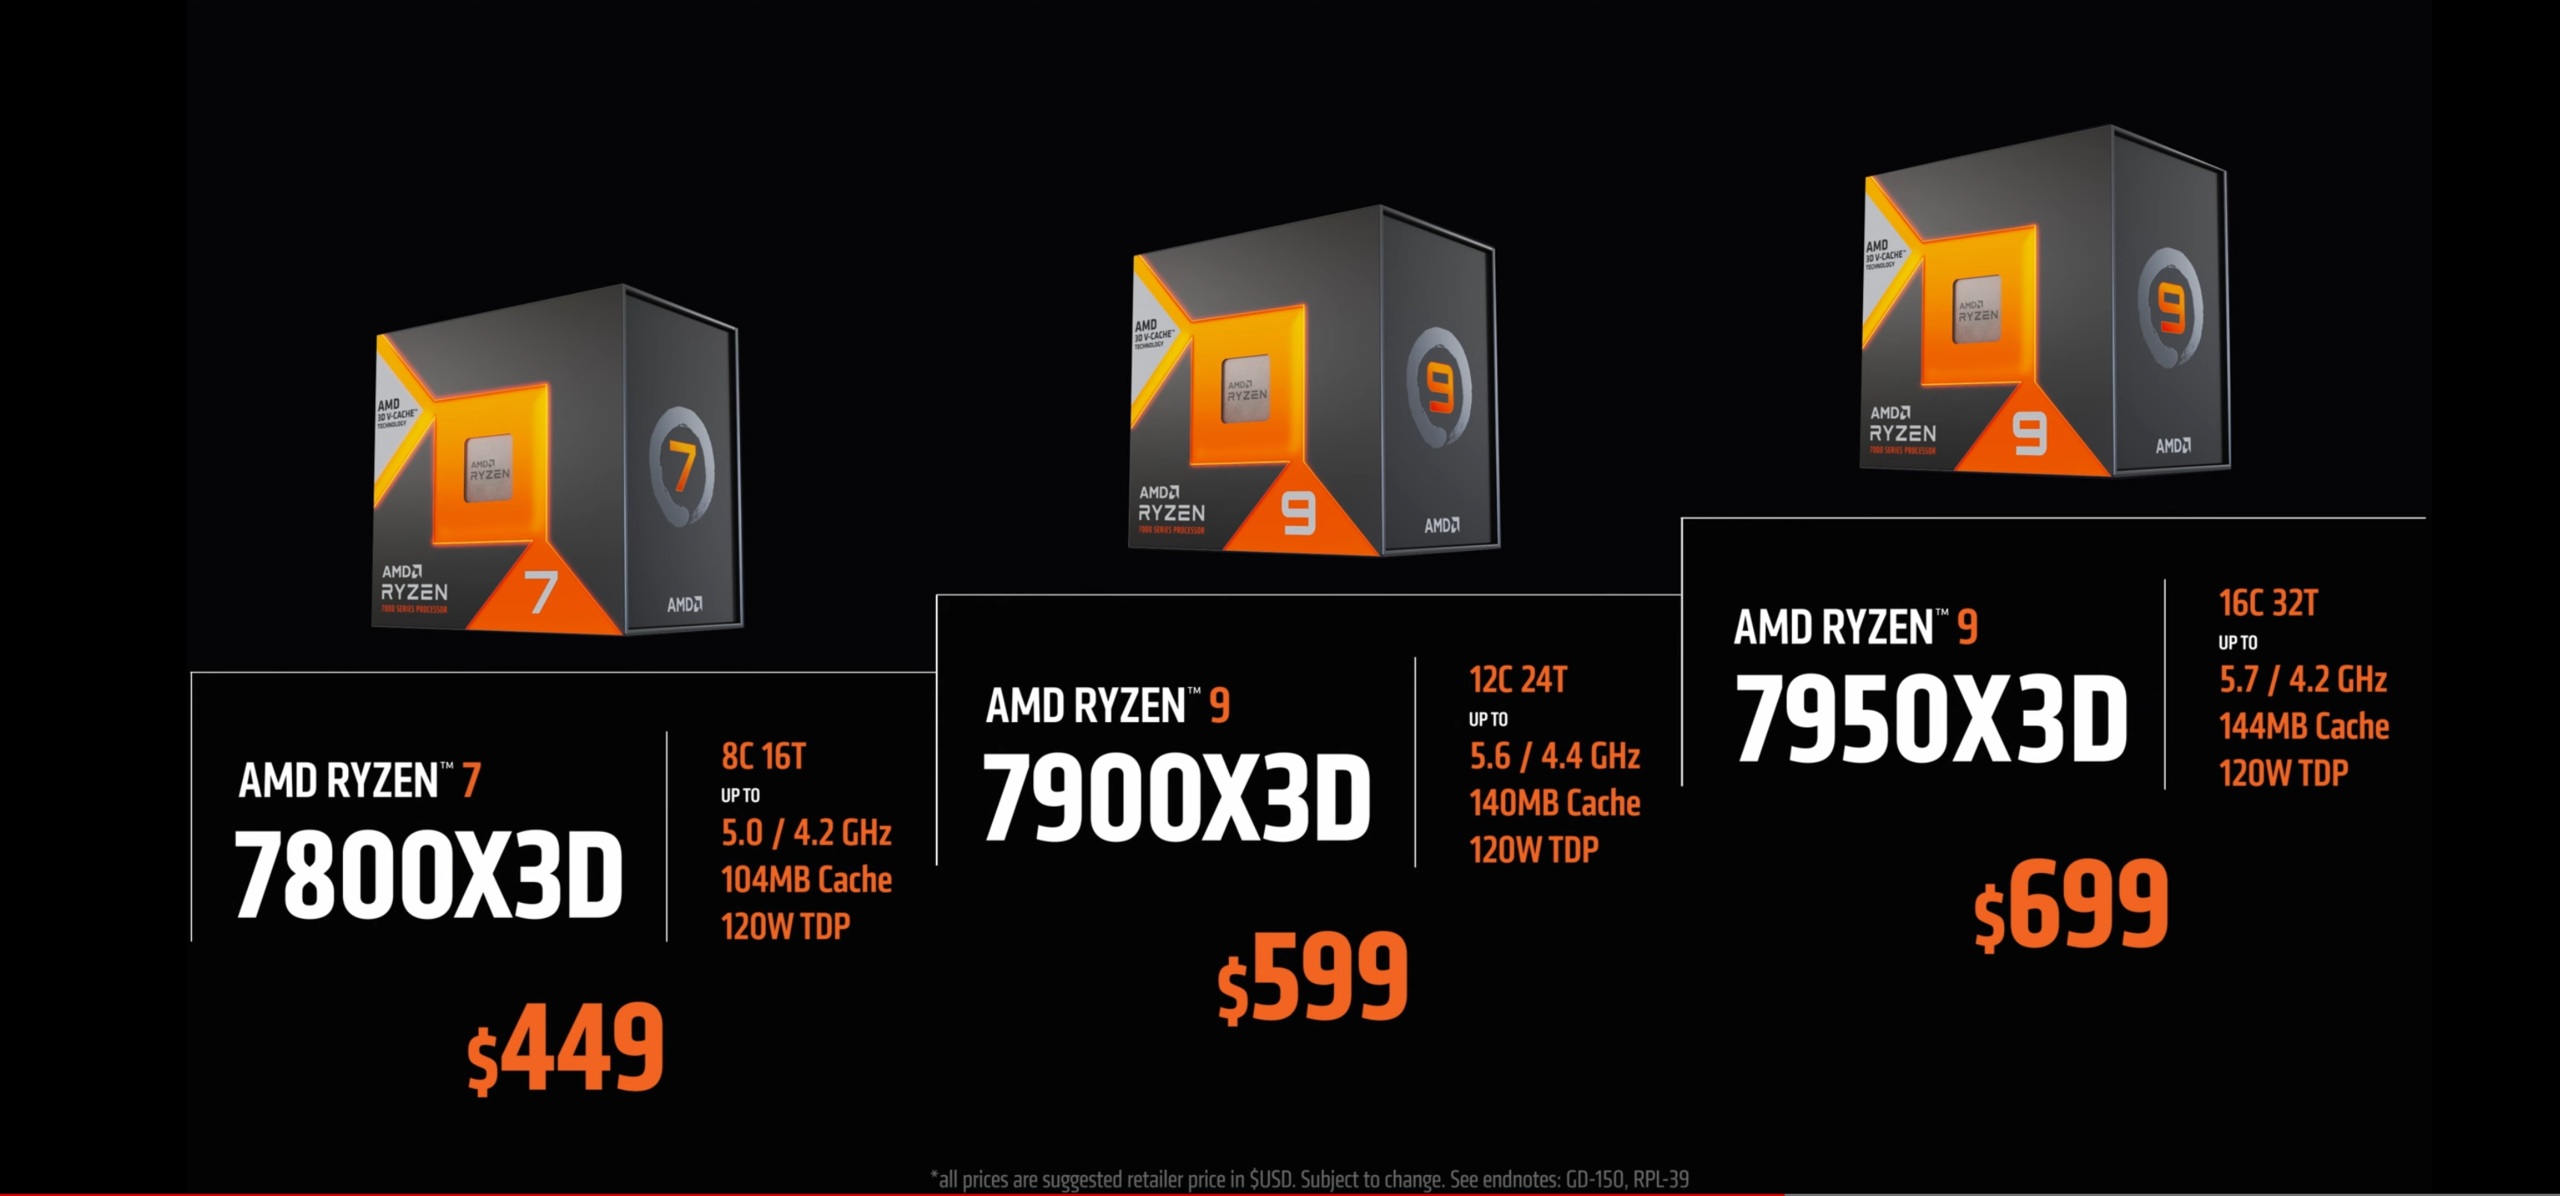 Sejarah Tinjauan AMD Ryzen 9 7950X3D vs 7900X3D Bocor Dimana Ryzen 7 7800X3D Diisyaratkan Memiliki Jam Cache V-V 3D Lebih Cepat vs Ryzen 9 7950X3D